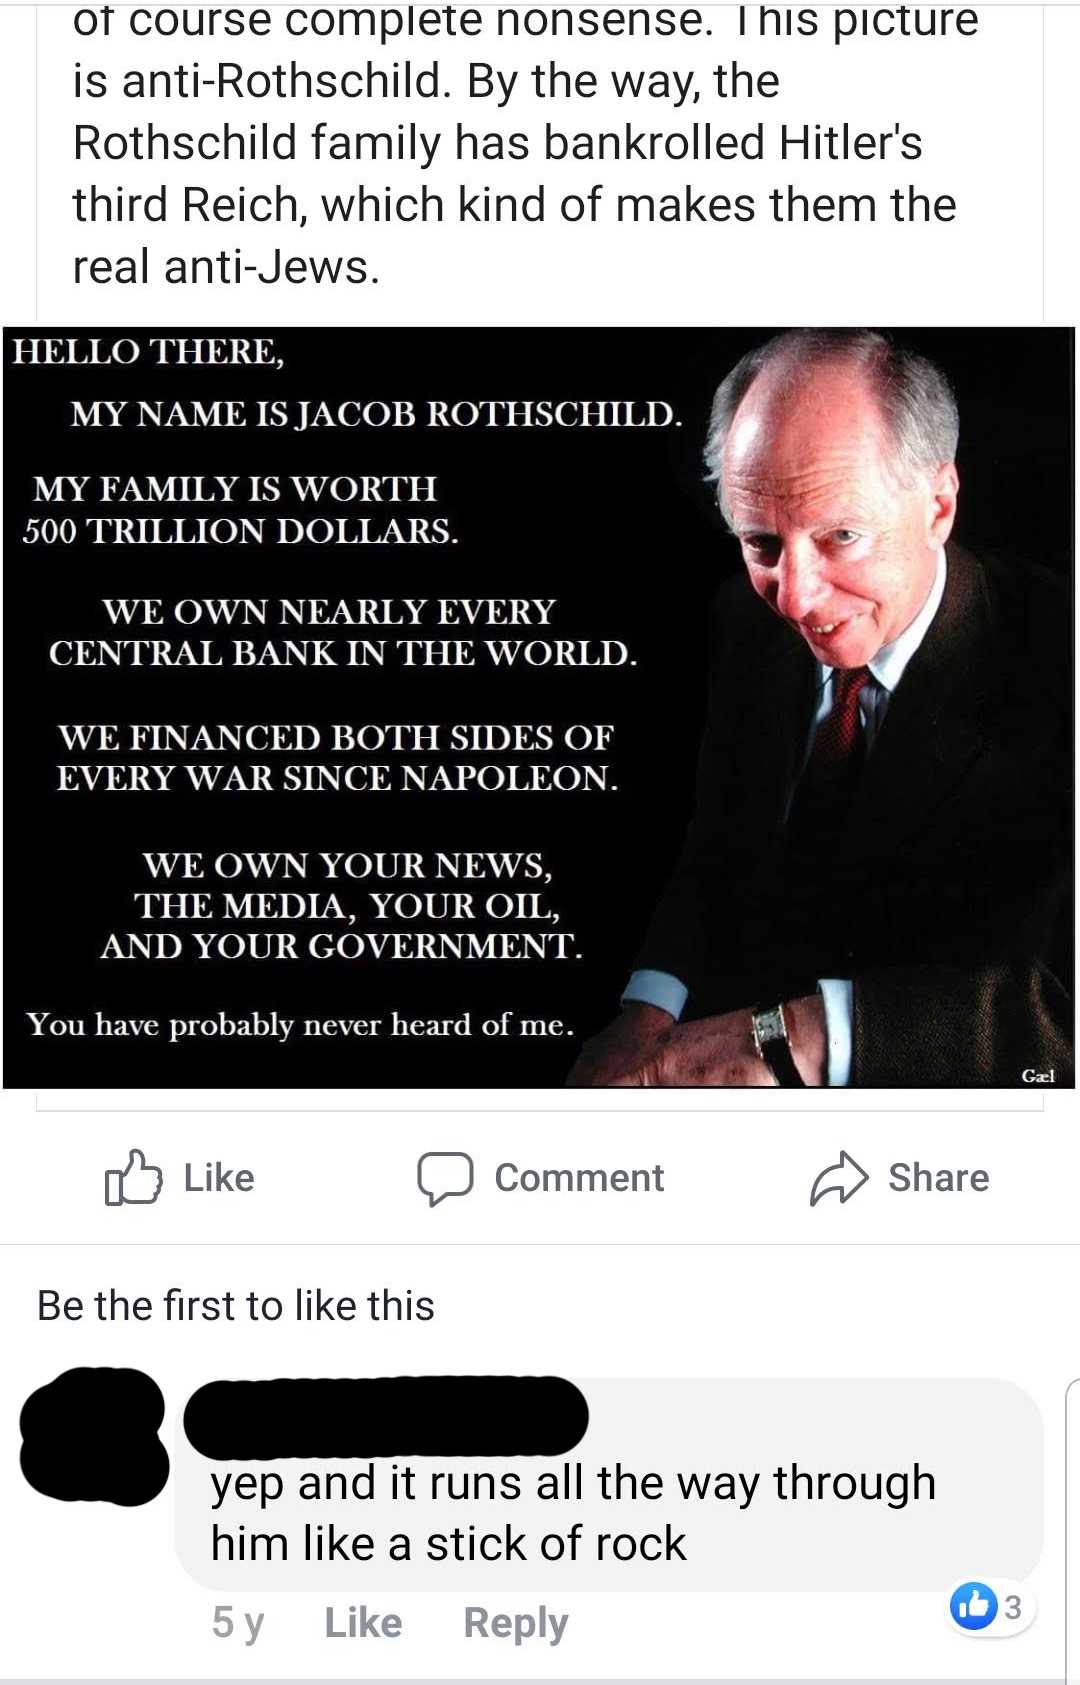 more antisemitic Rothschild conspiracies